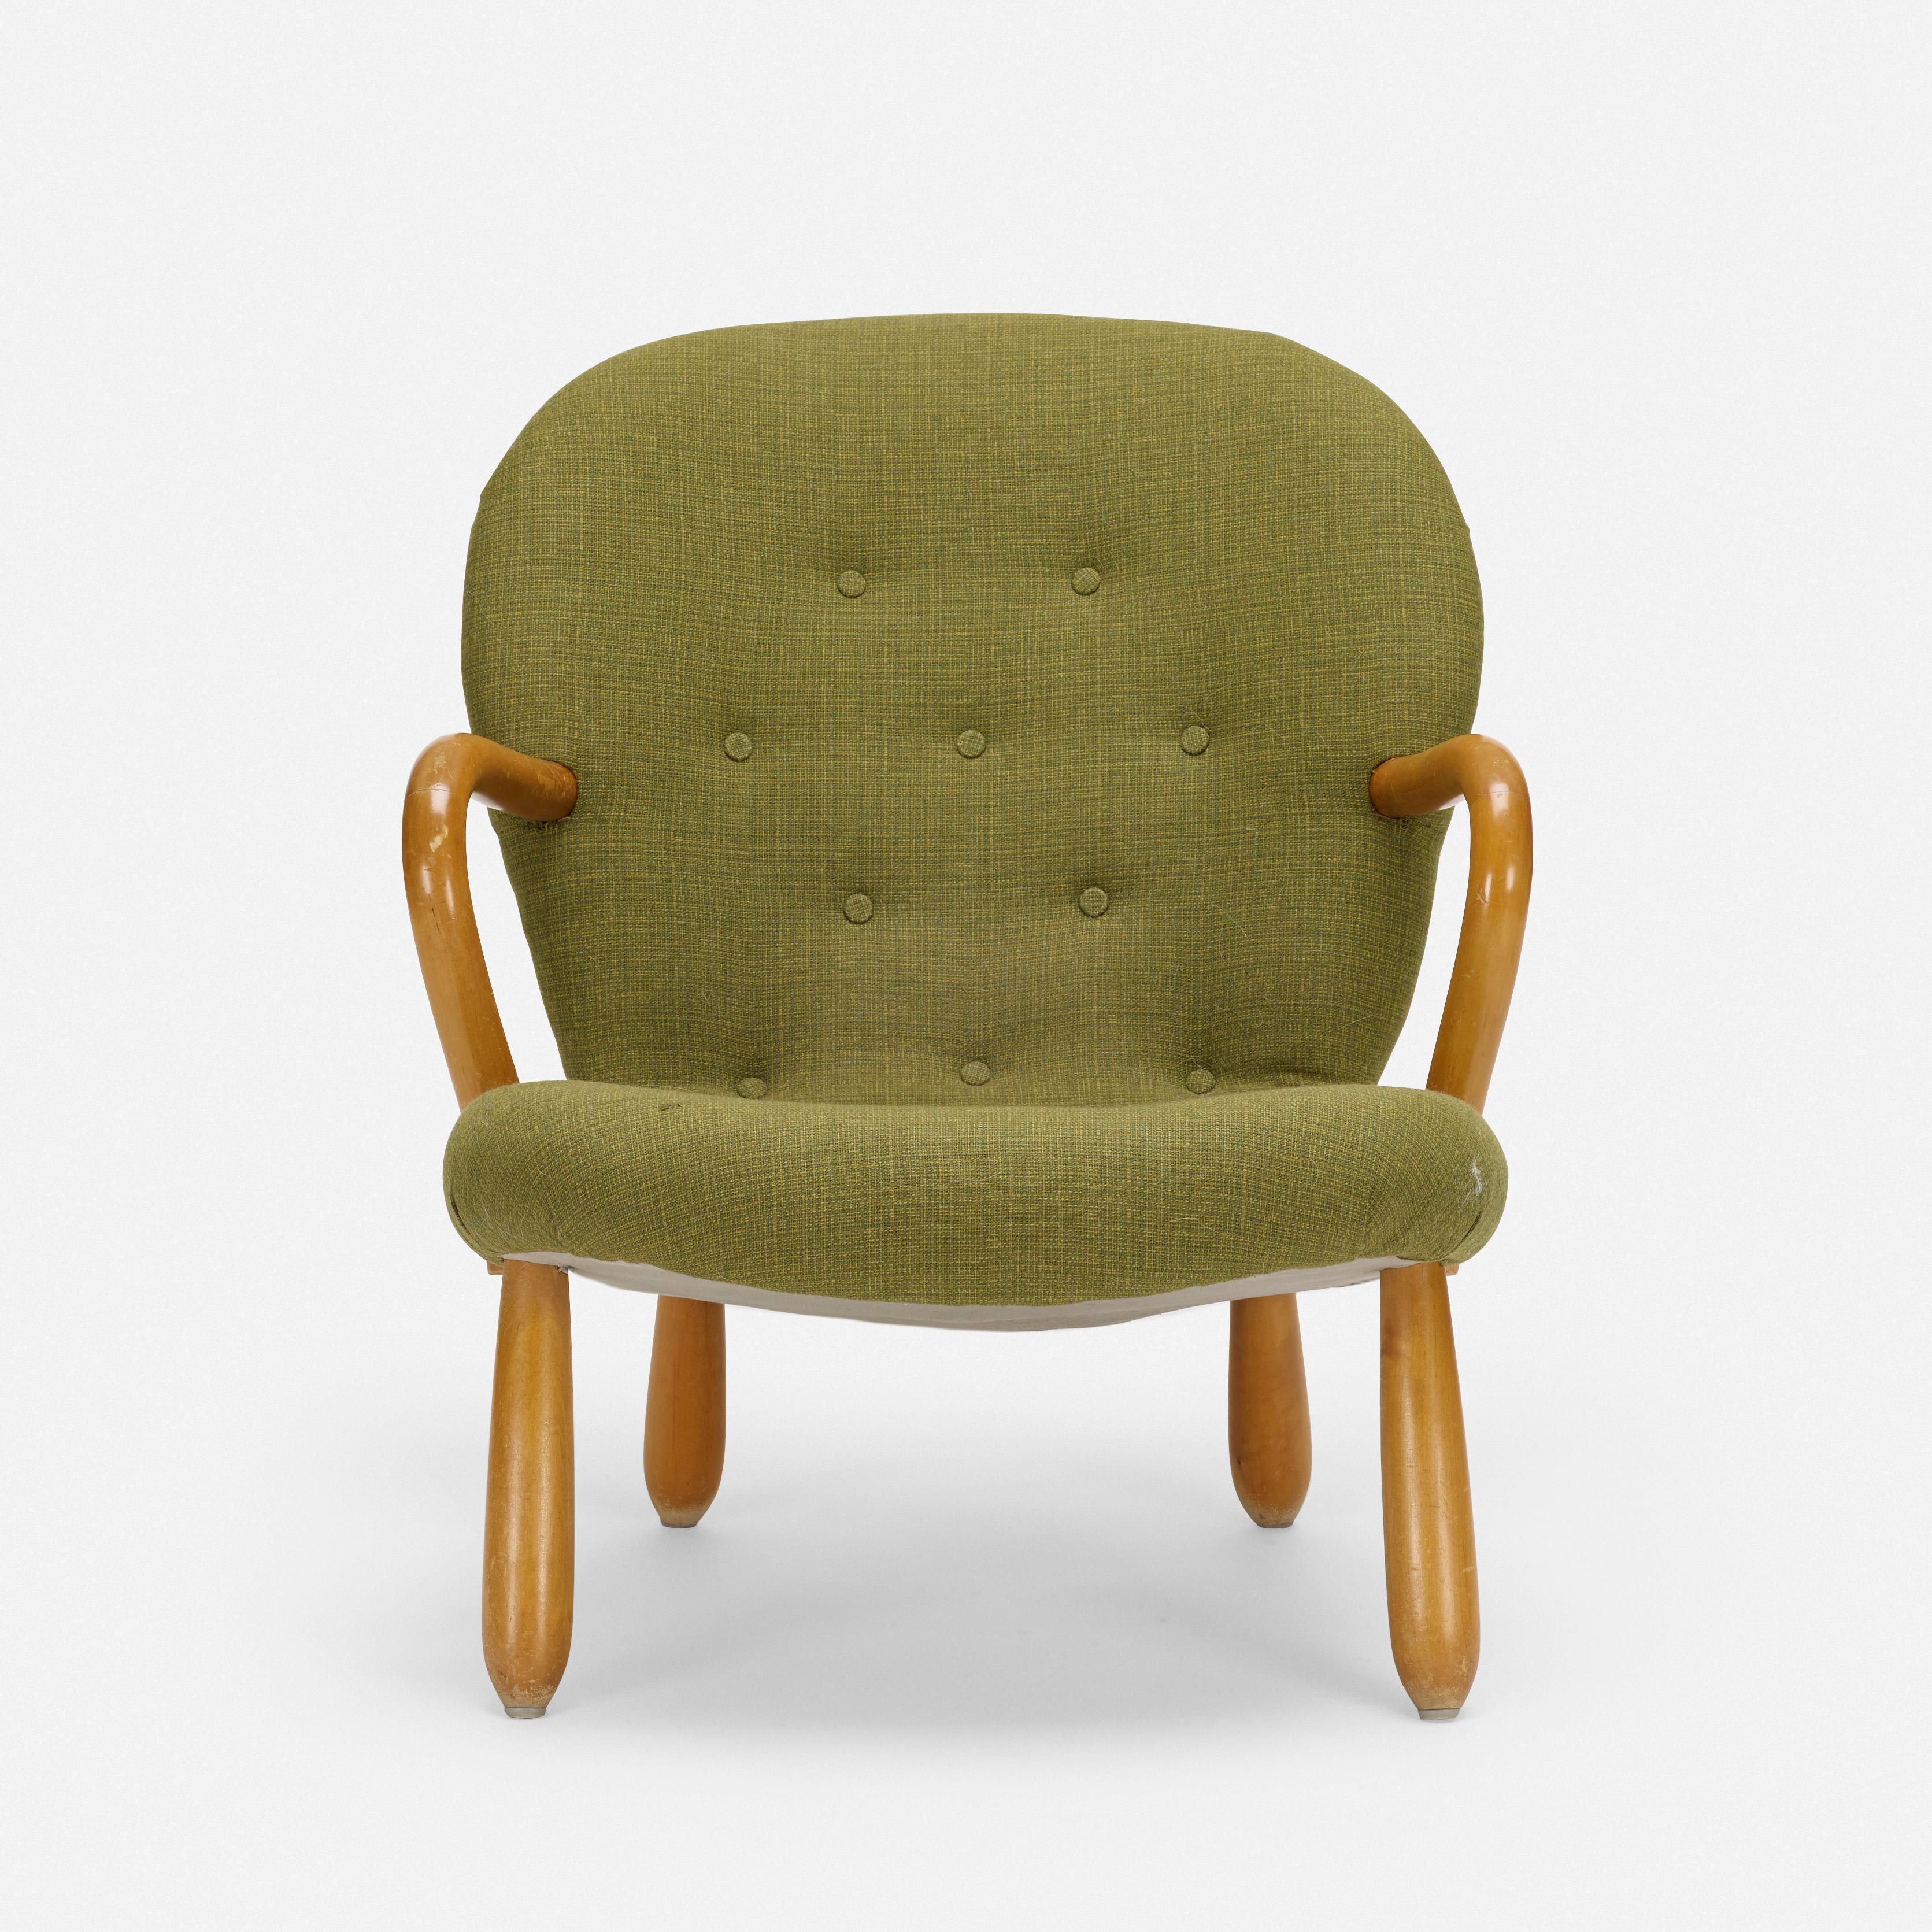 Made by: Sune Johanssons Möbelfabrik, Denmark / Sweden, 1944 / c. 1955

Material: upholstery, beech

Size: 28 W × 33.5 D × 31.5 H in

Stamped manufacturer's mark to underside of armrest.